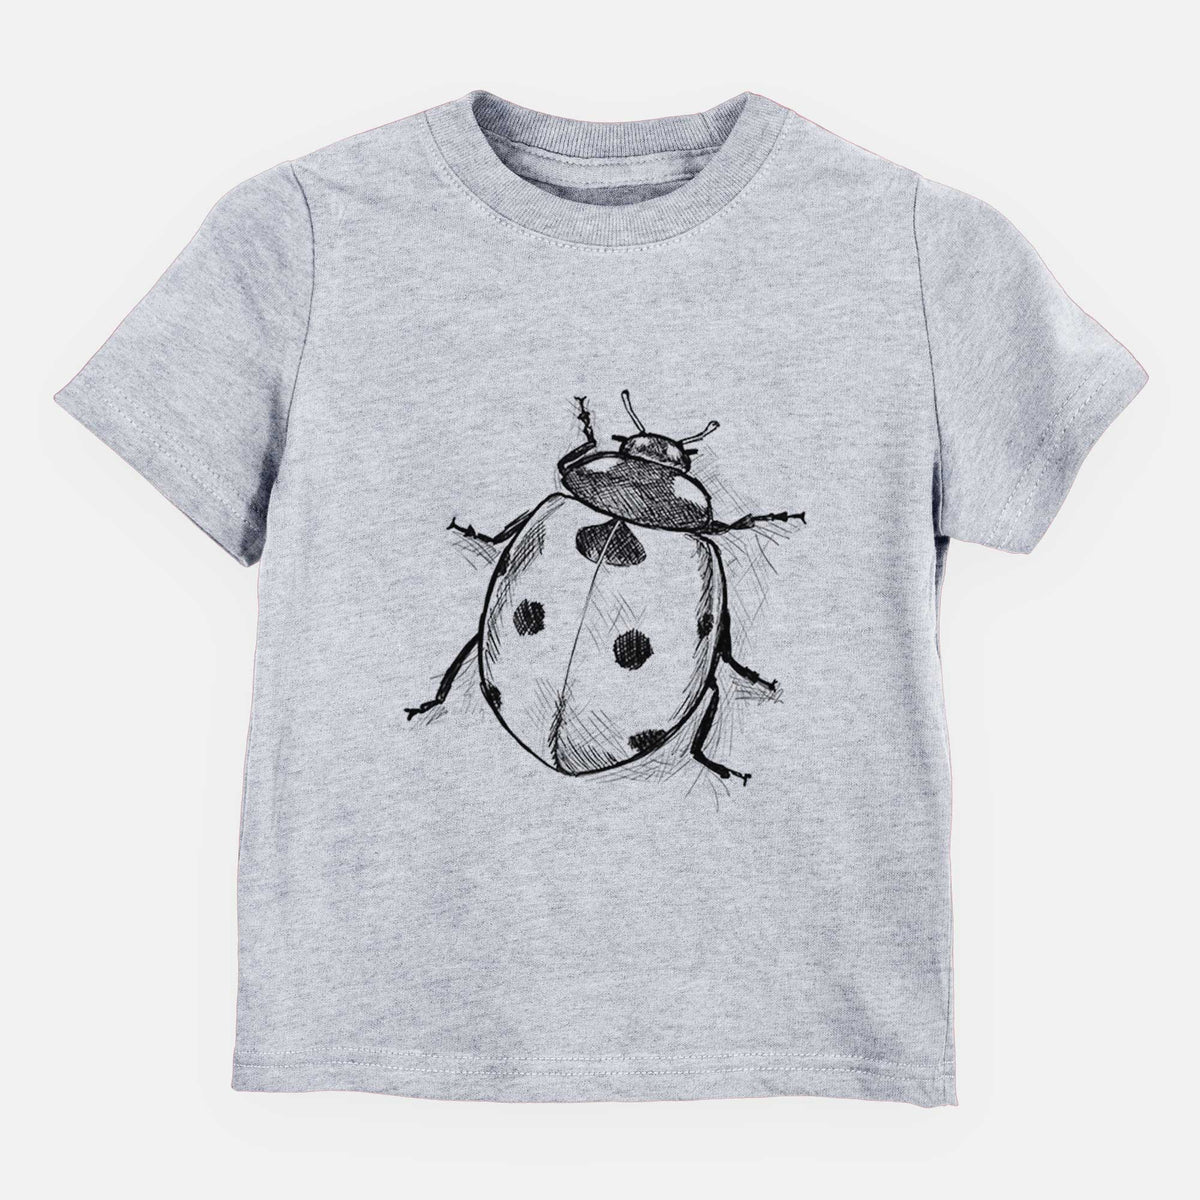 Coccinella septempunctata - Seven-spot LadyBird Ladybug - Kids Shirt